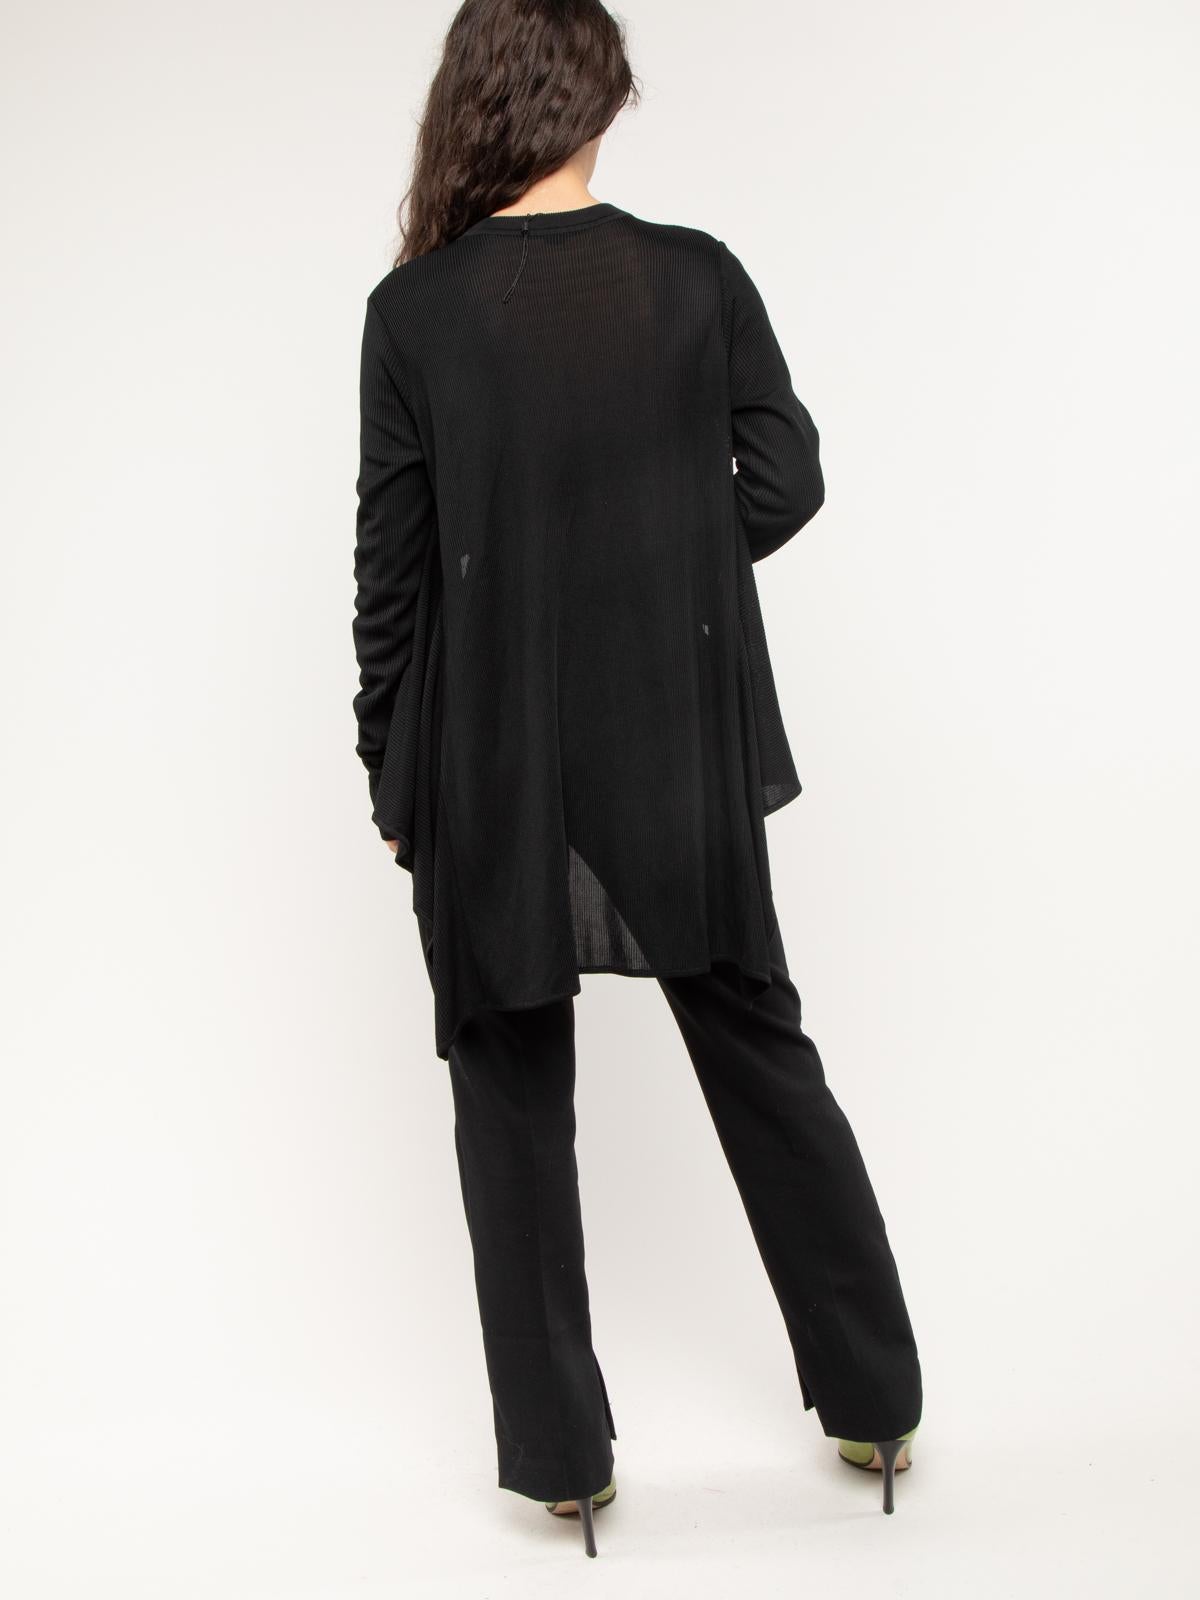 Pre-Loved Alexander Wang Women's Black Knitted High-Front Overlay Jumper 1